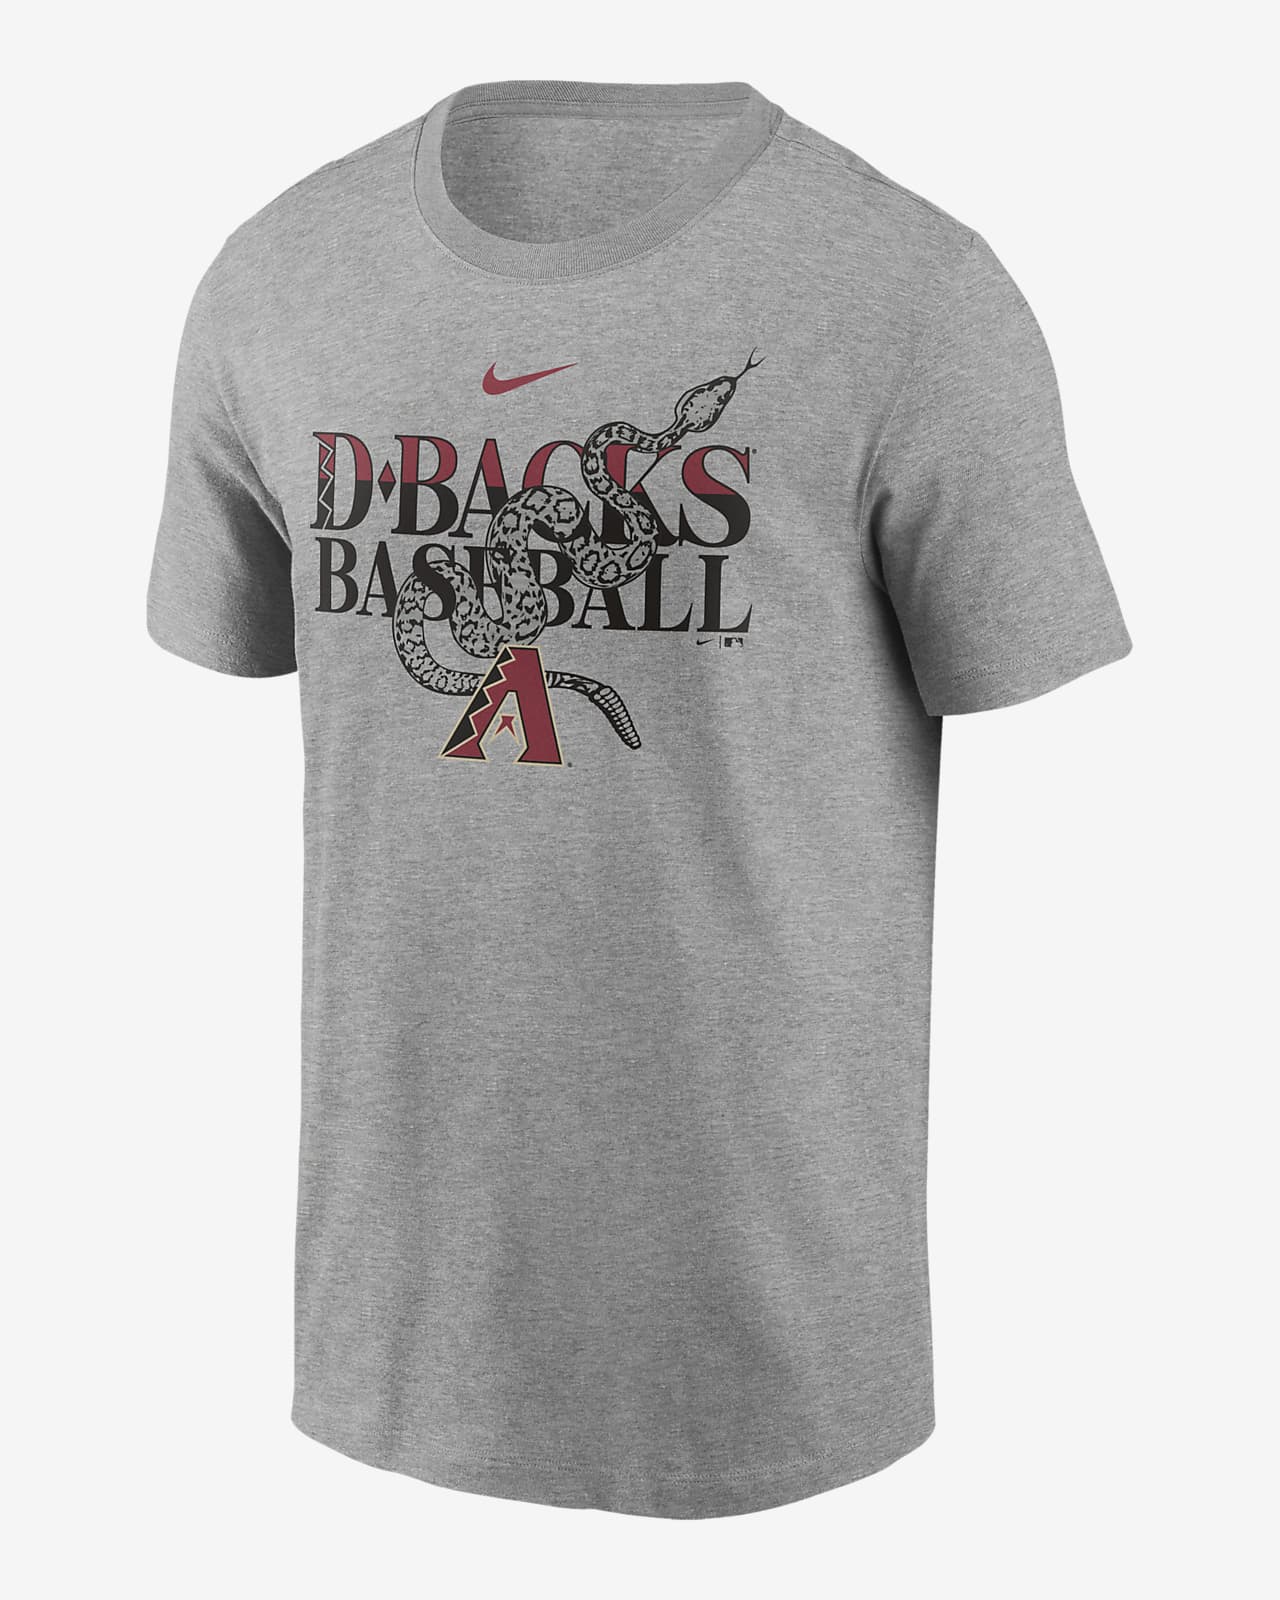 MLB Arizona Diamondbacks T Shirt Mens Size 2XL Baseball D Backs Gear